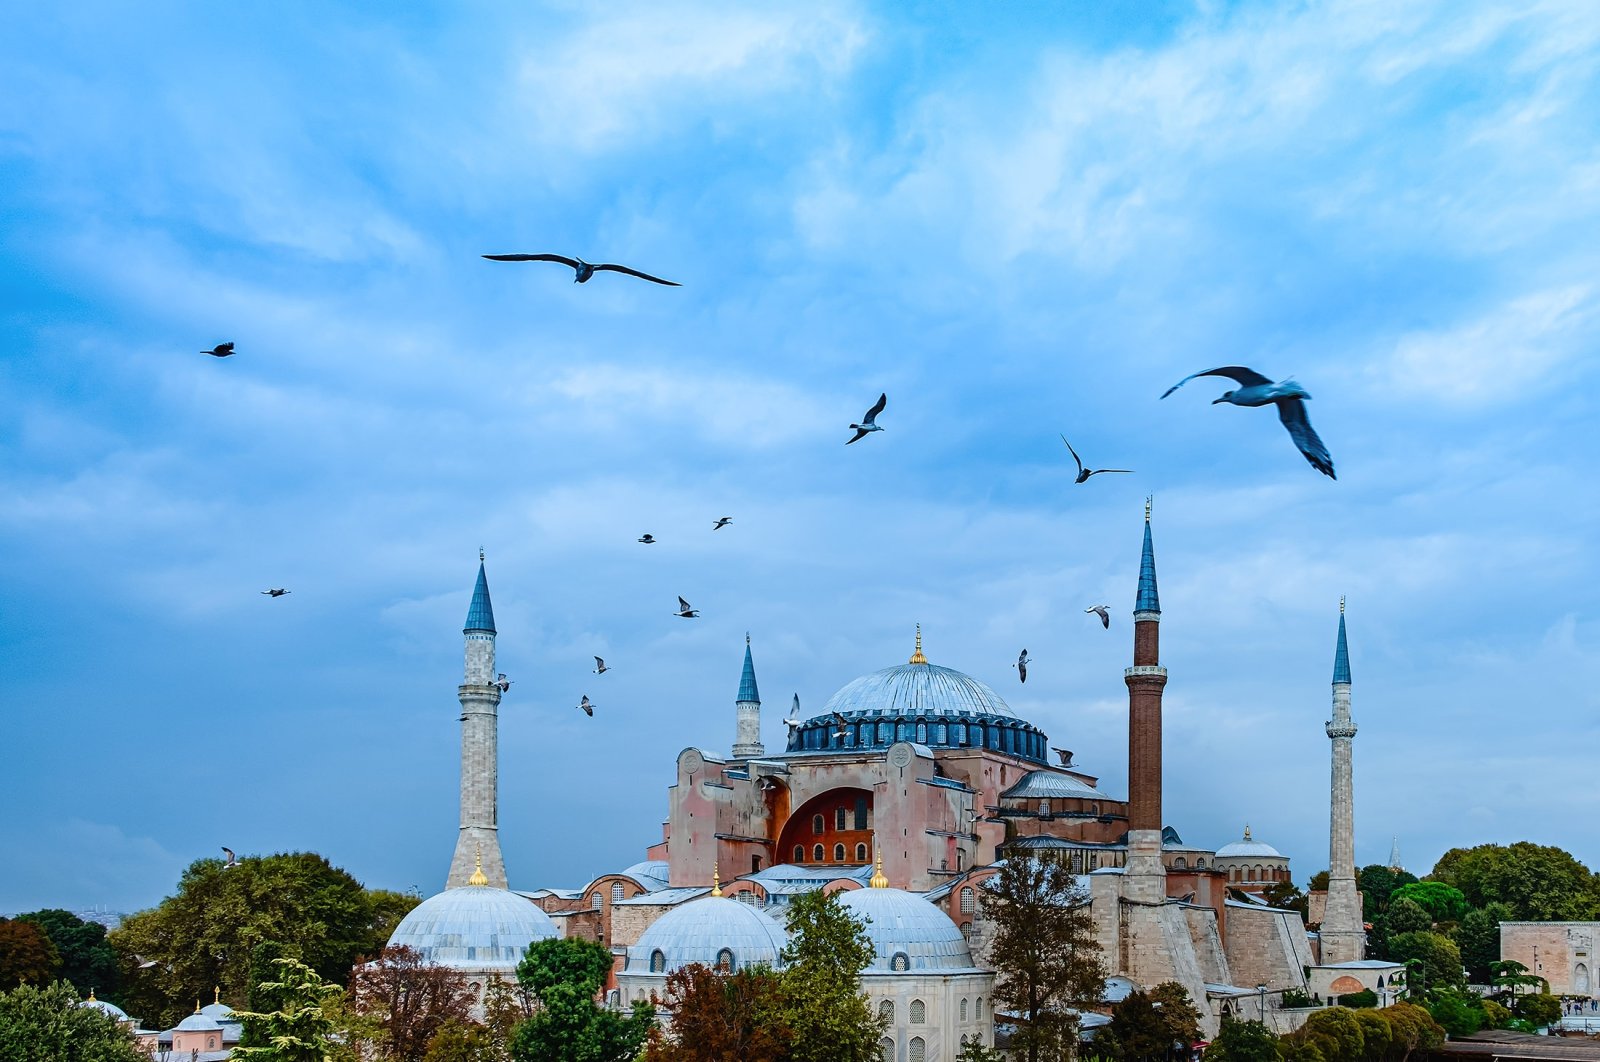 The Hagia Sophia Grand Mosque in Sultanahmet, Istanbul, Turkey. (Shutterstock Photo)